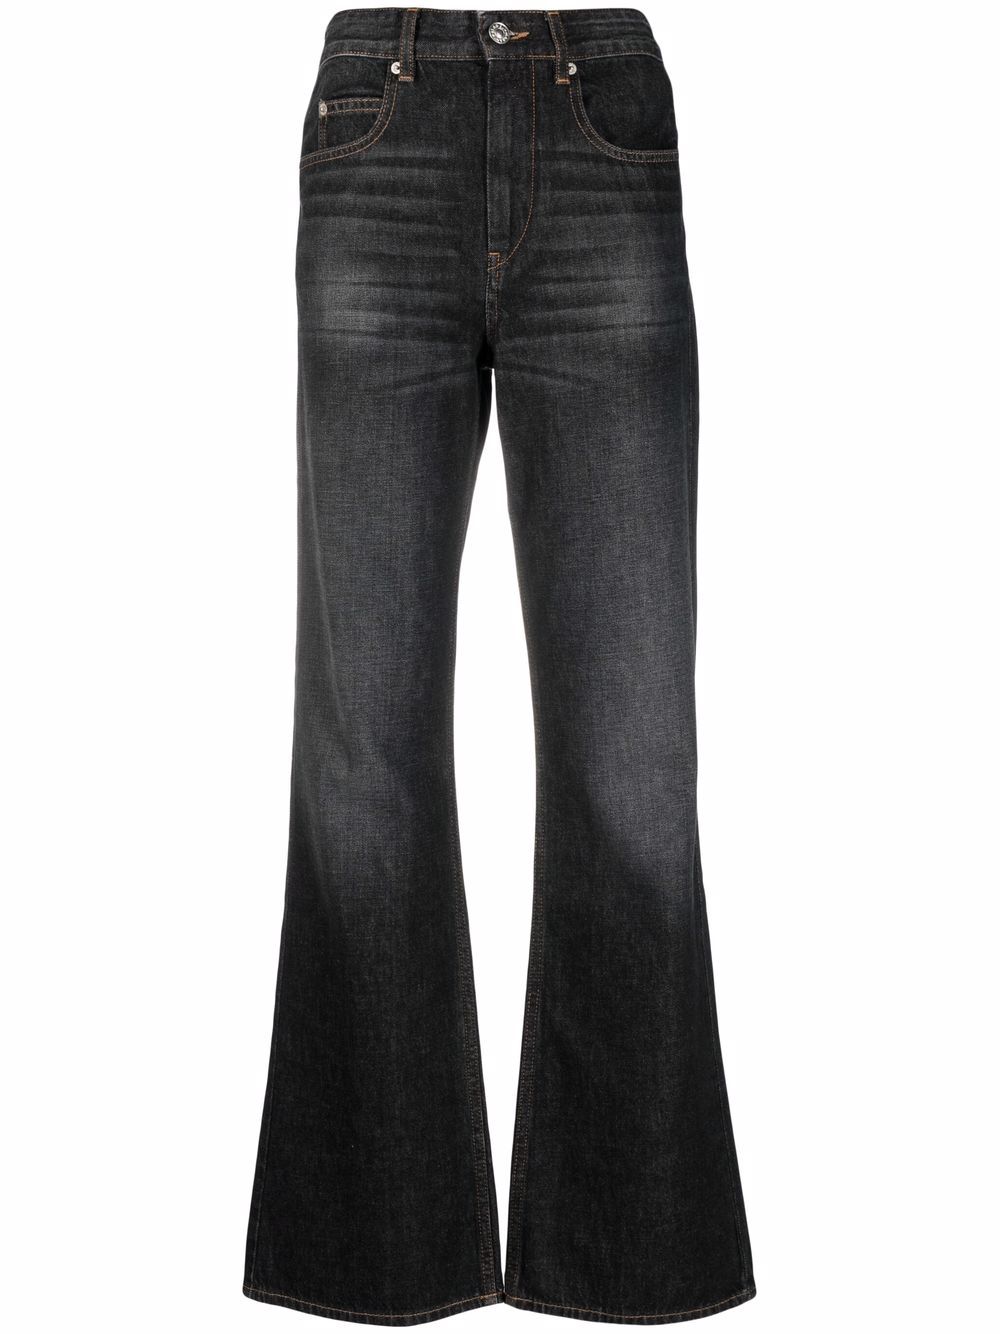 MARANT ÉTOILE flared-leg jeans - Black von MARANT ÉTOILE